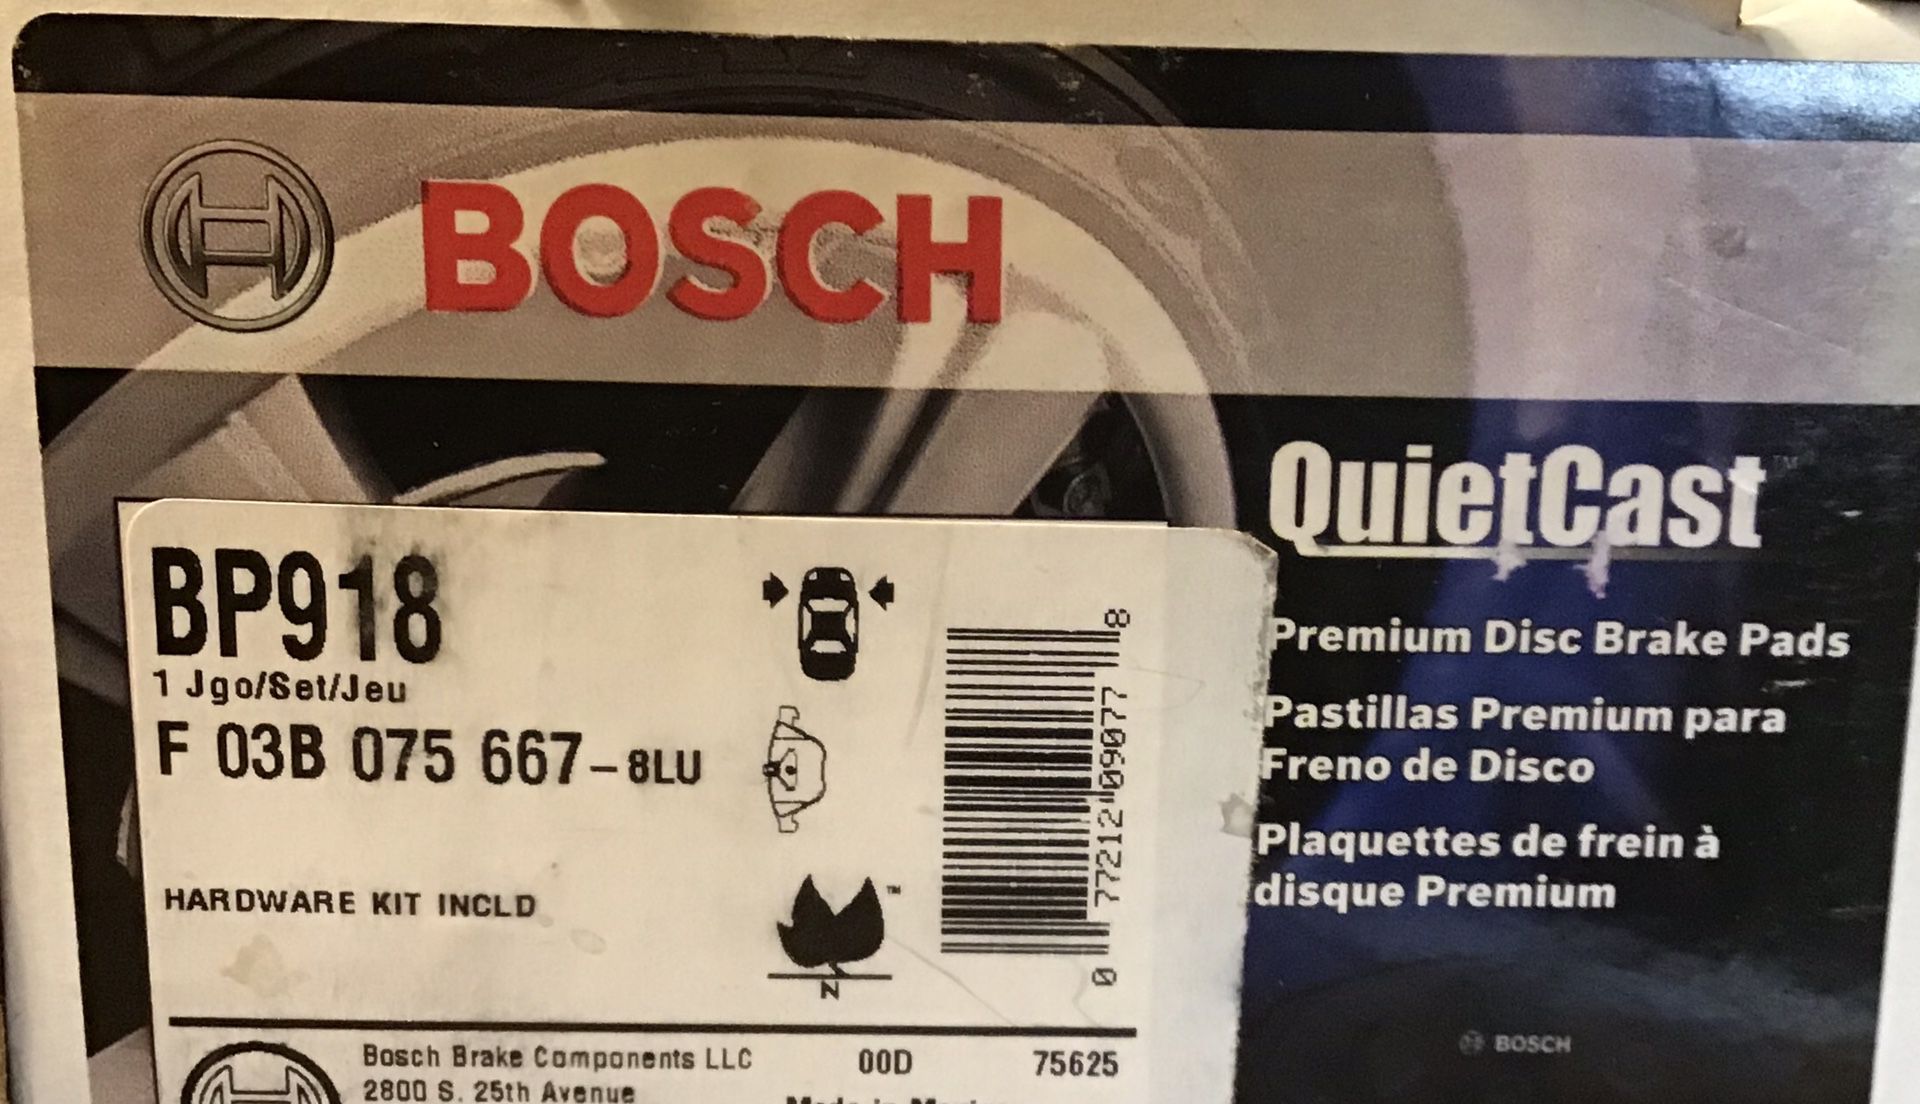 Bosch Premium Disc Brake Pads Front - BP 918